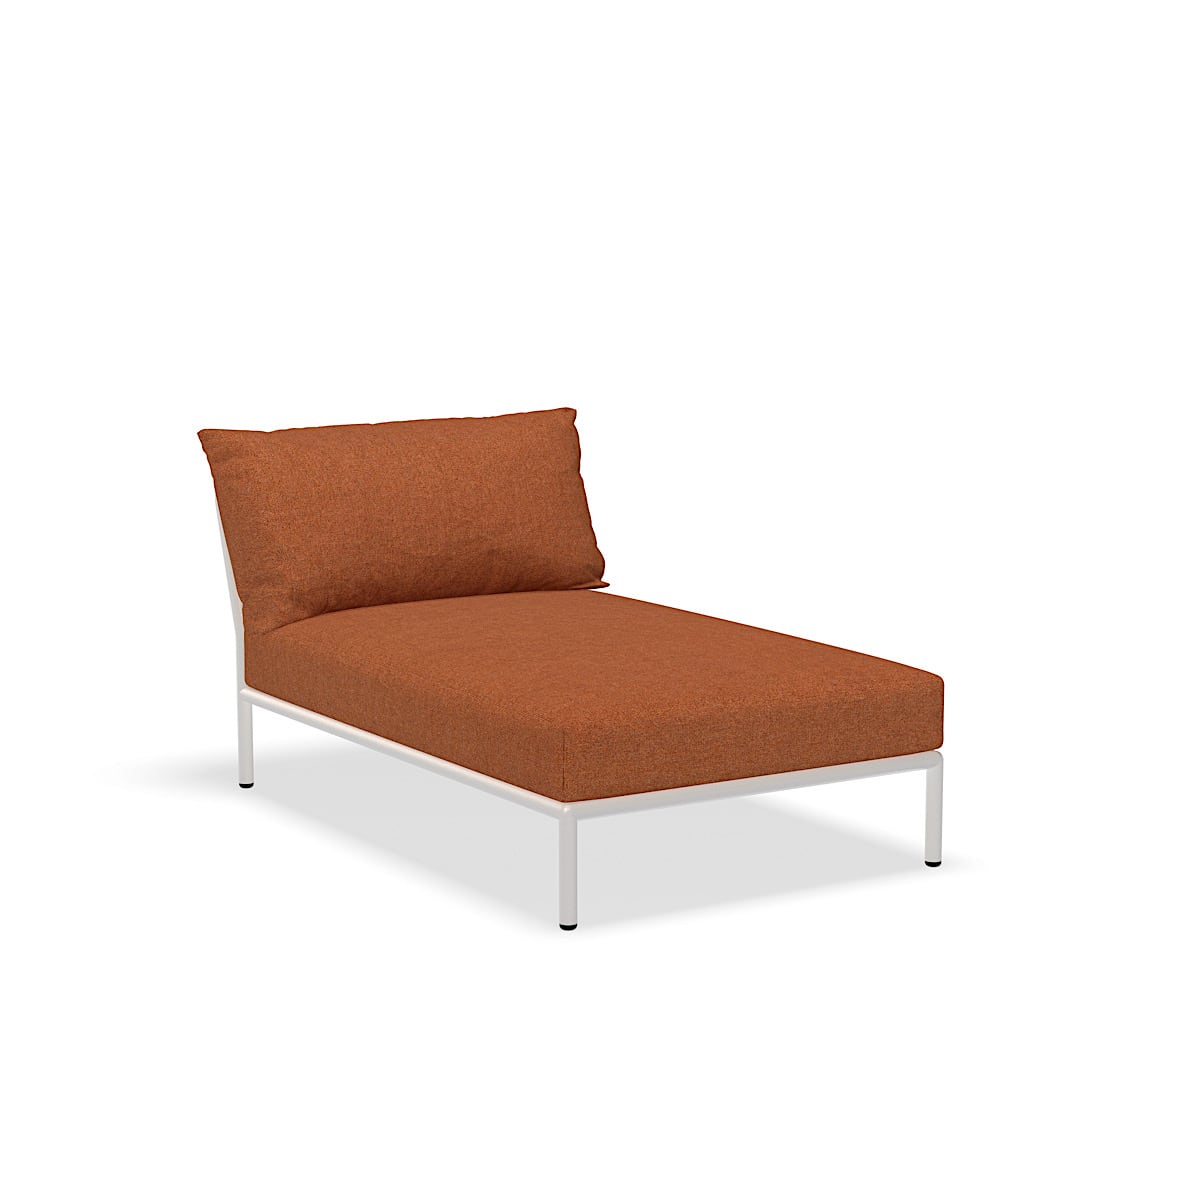 躺椅：139 x 81 x 68.5 釐米（長 x 寬 x 高） - 22209-1743 - 躺椅， Rust （HERITAGE）， 白色結構